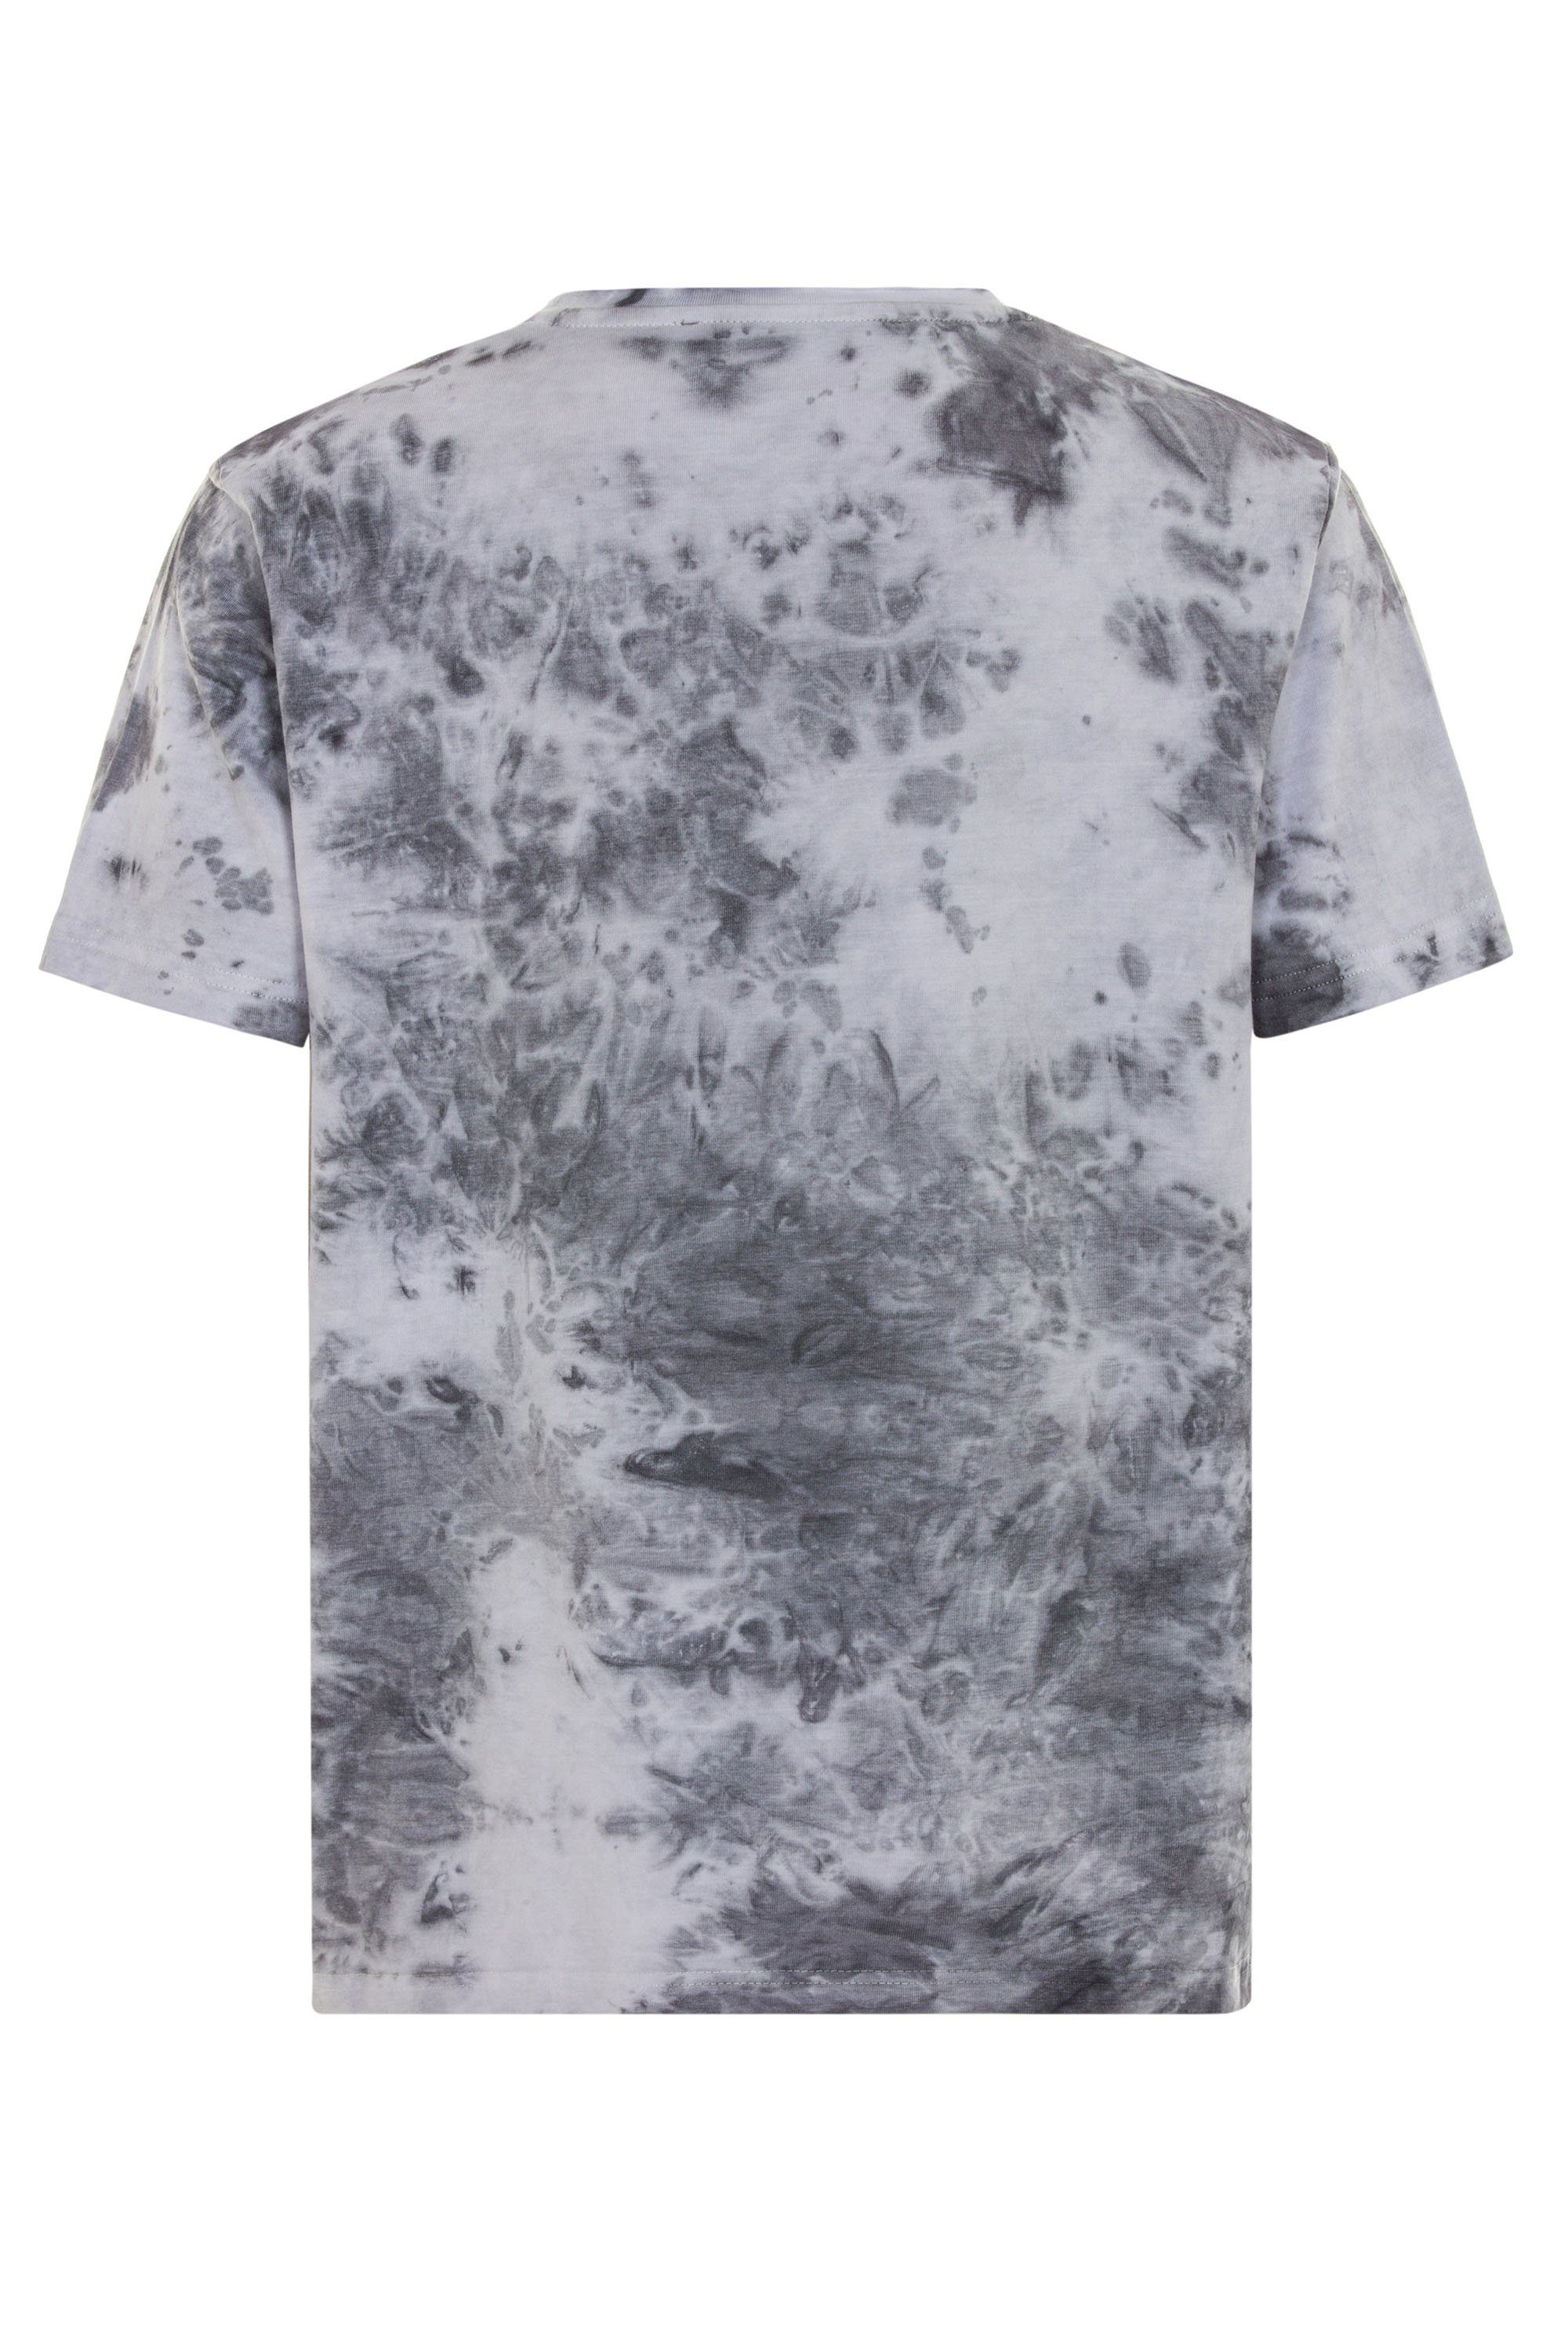 Cipo & Baxx T-Shirt anthrazit großflächigem Markenprint mit